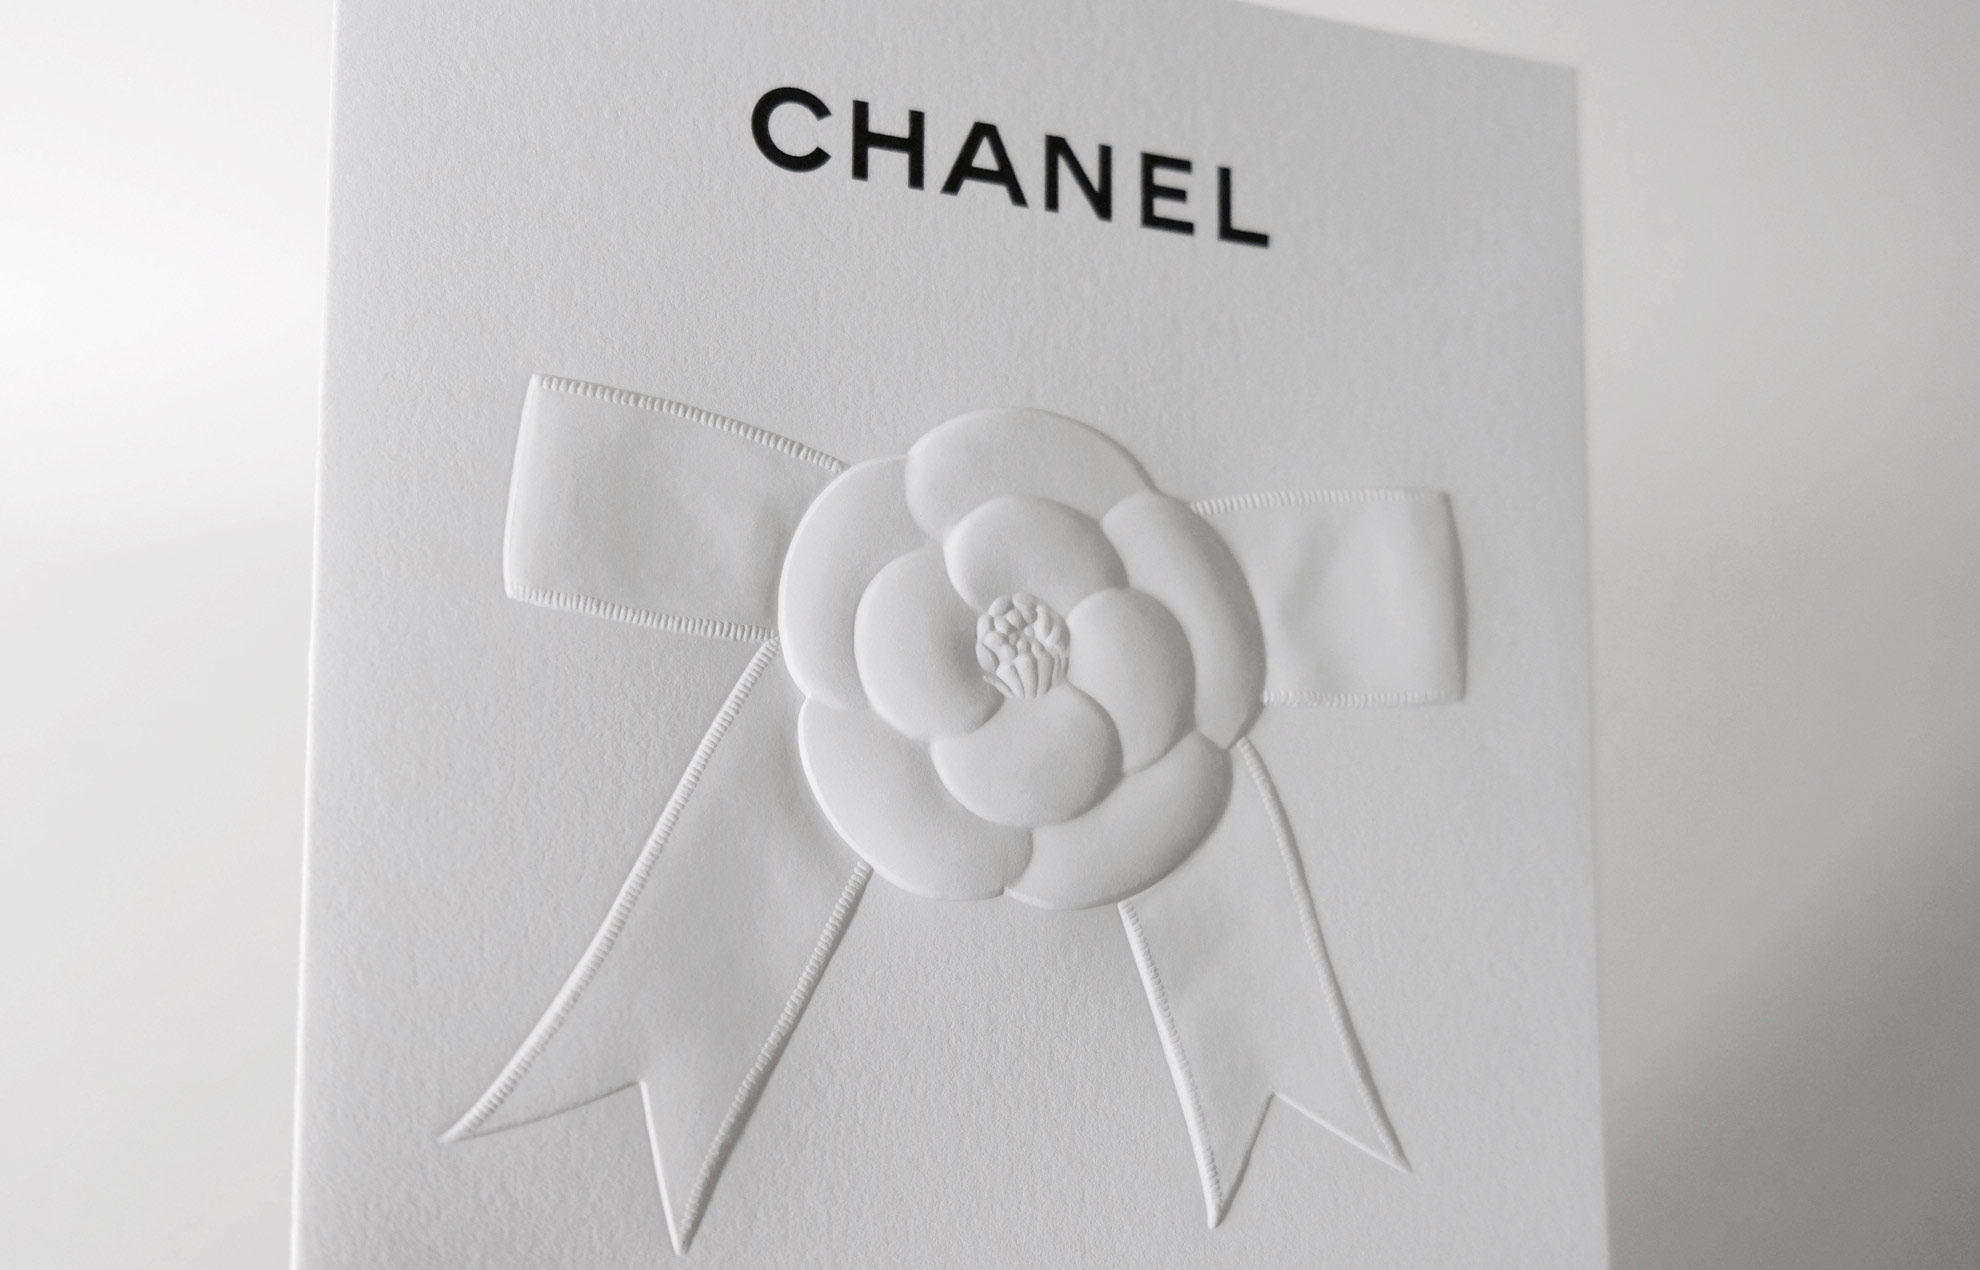 Chanel - Métiers d’Art 2019/20 Collection